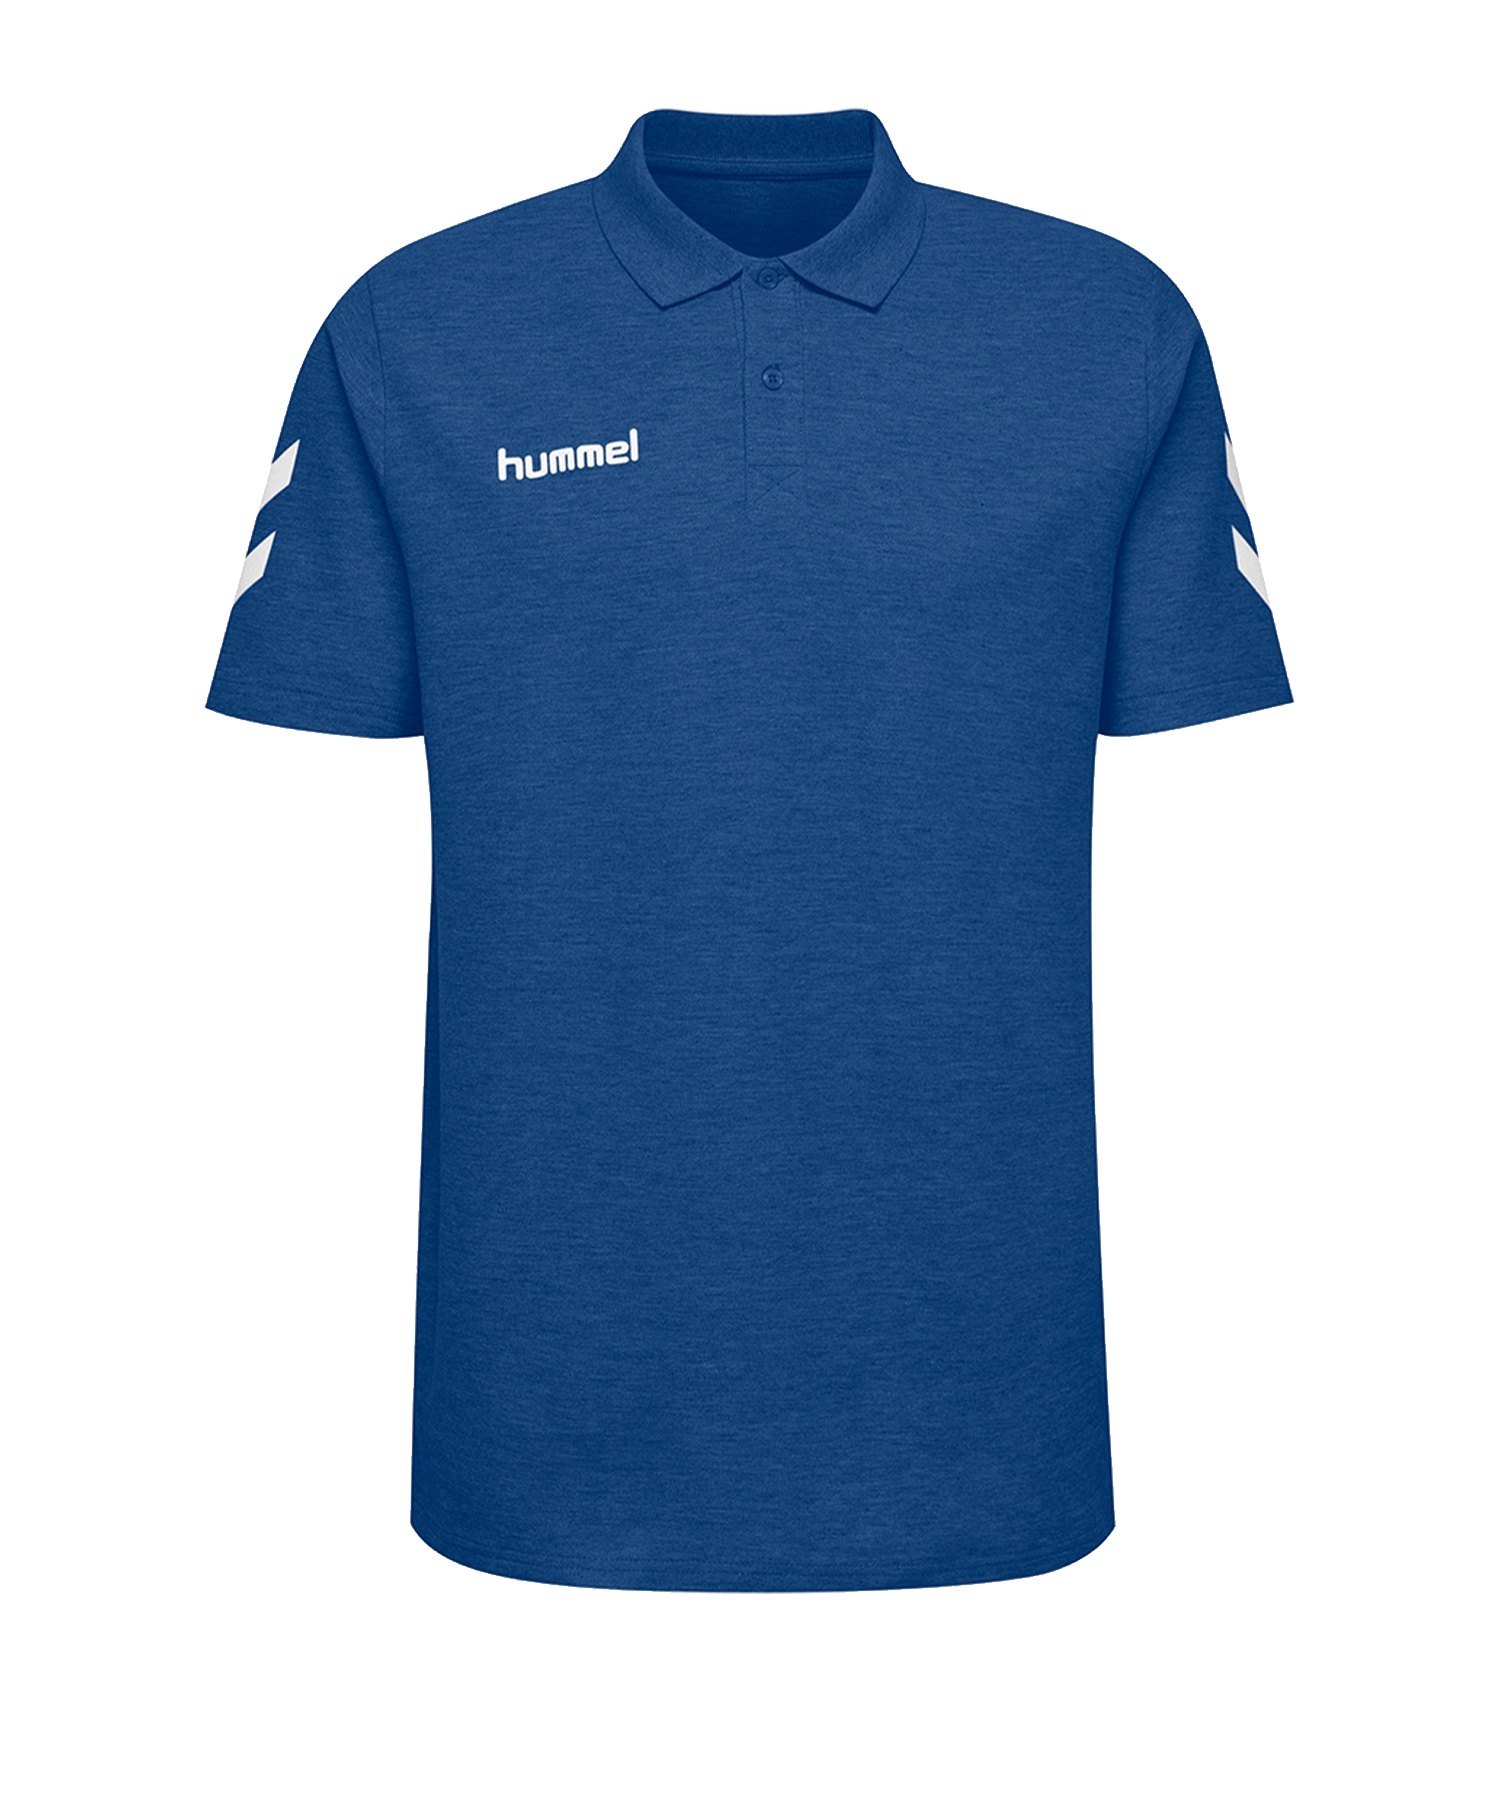 Hummel Cotton Poloshirt Kids Blau F7045 - Blau